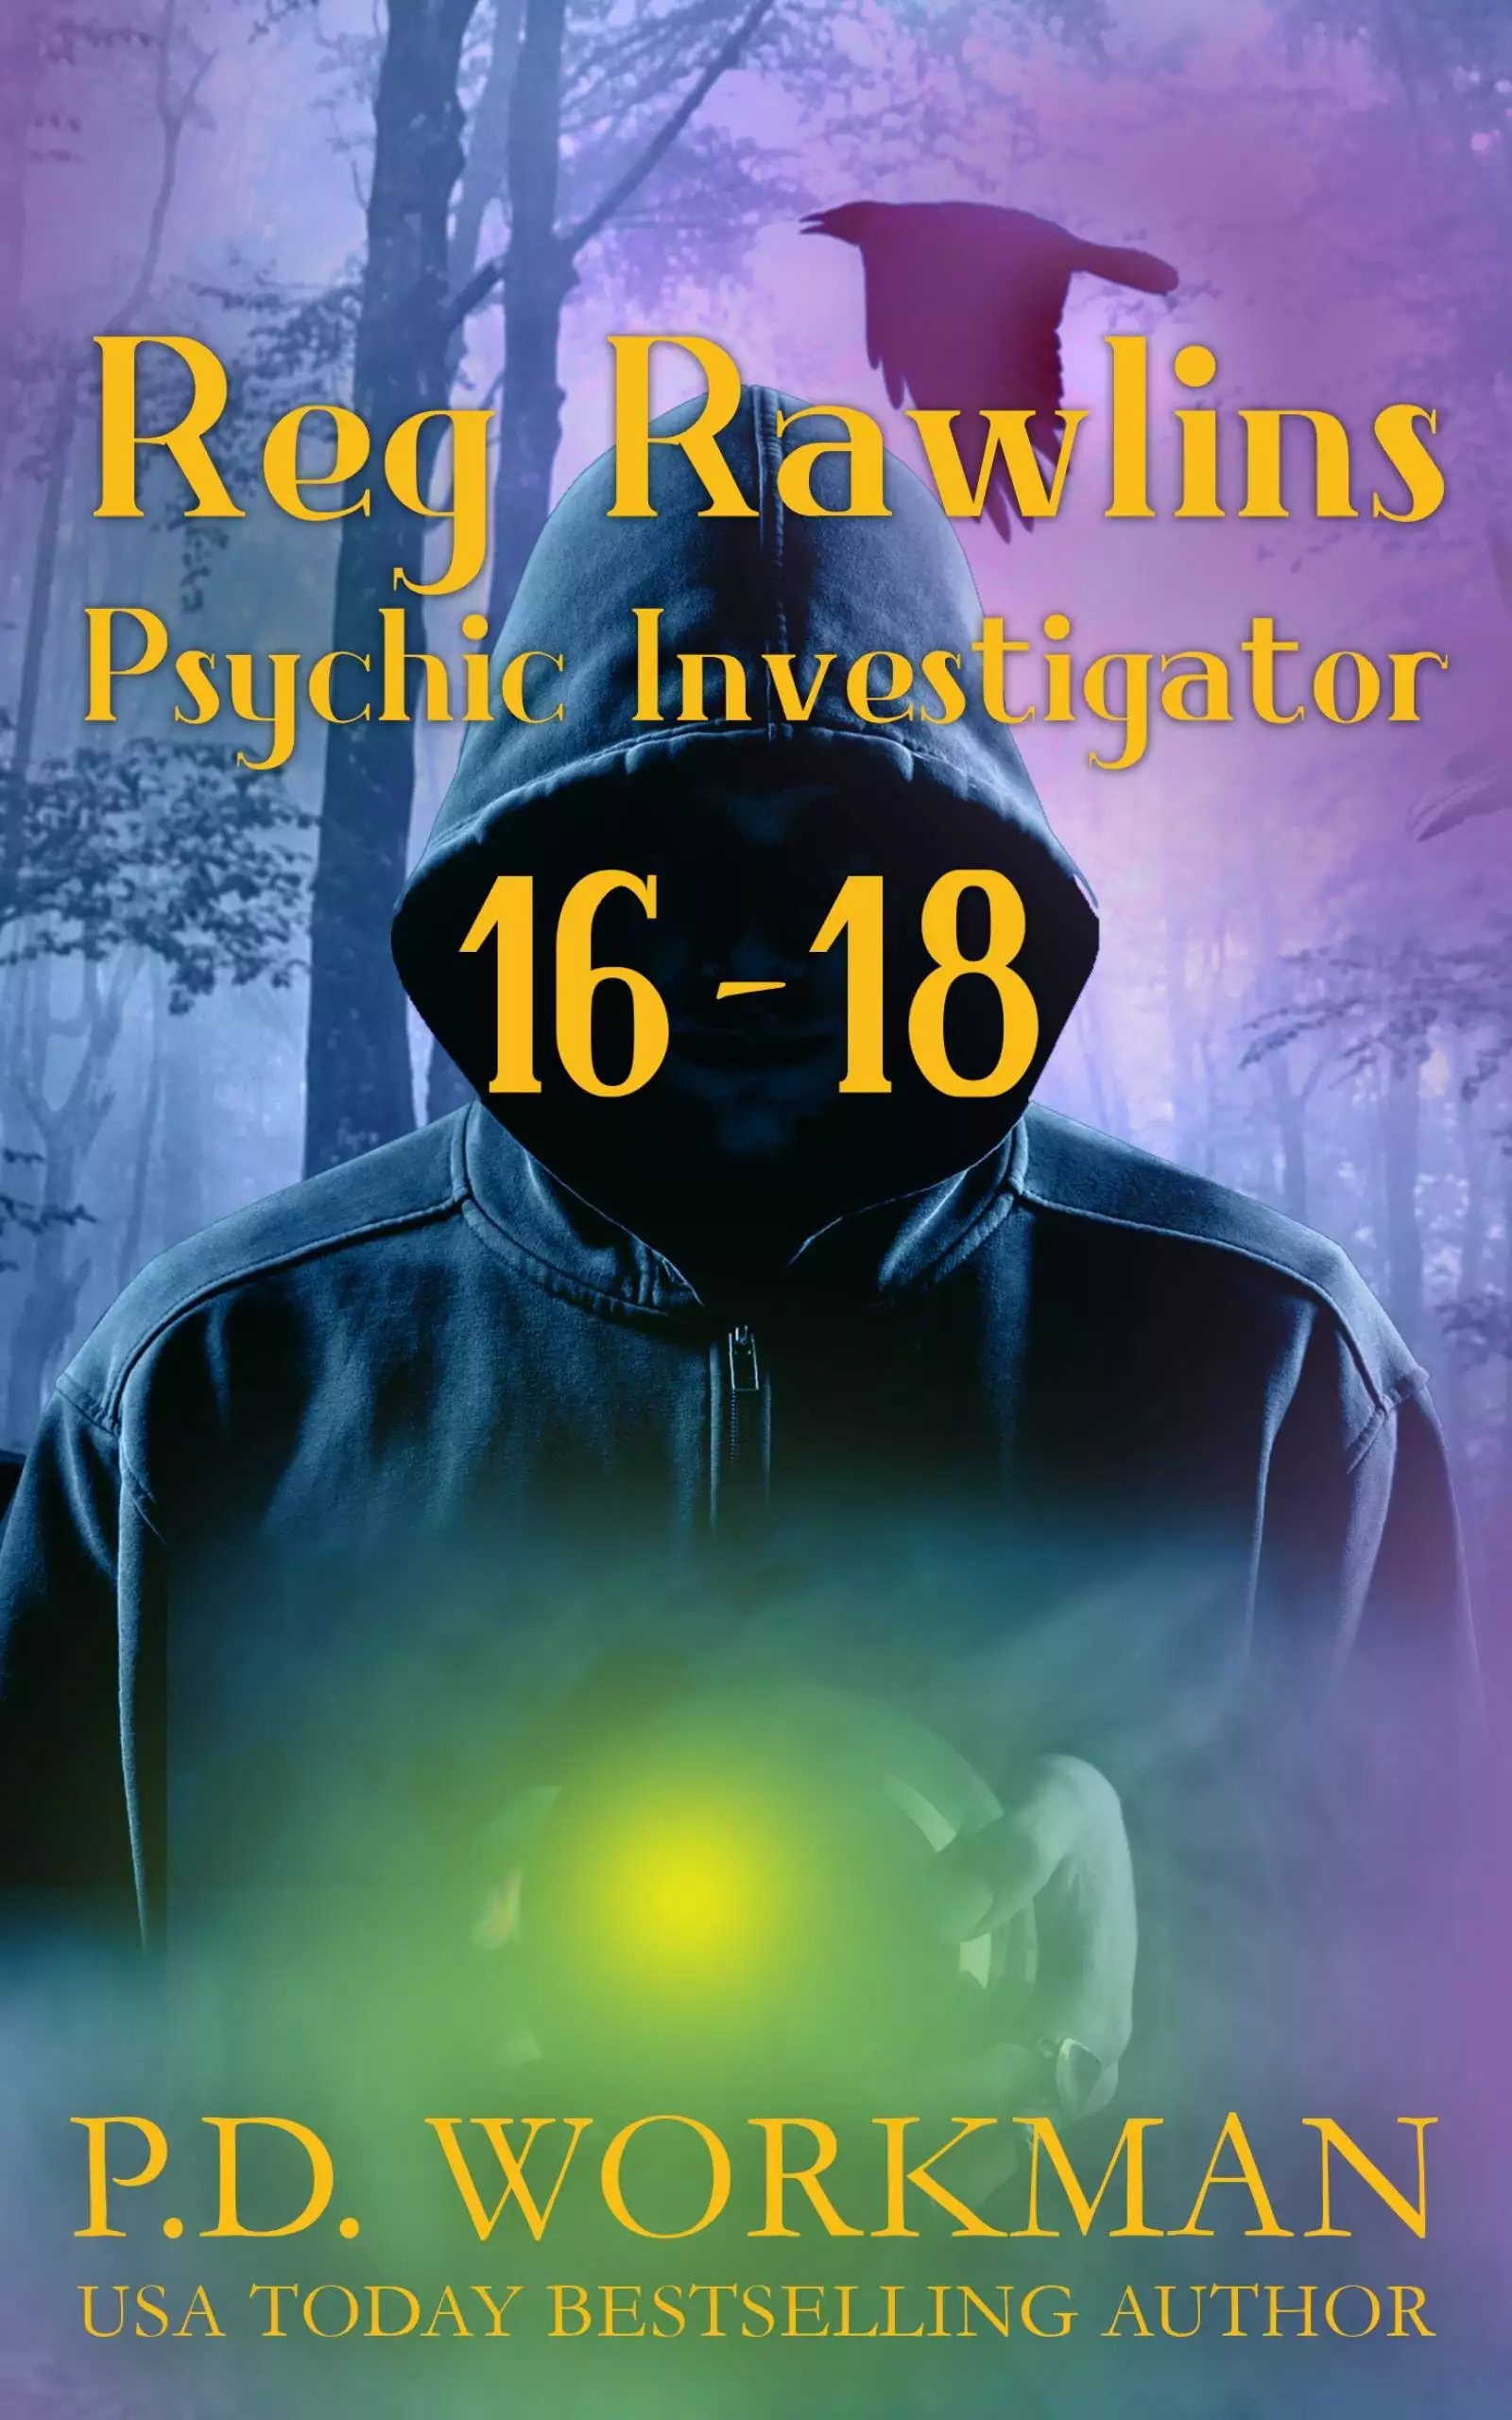 Reg Rawlins, Psychic Investigator 16-18